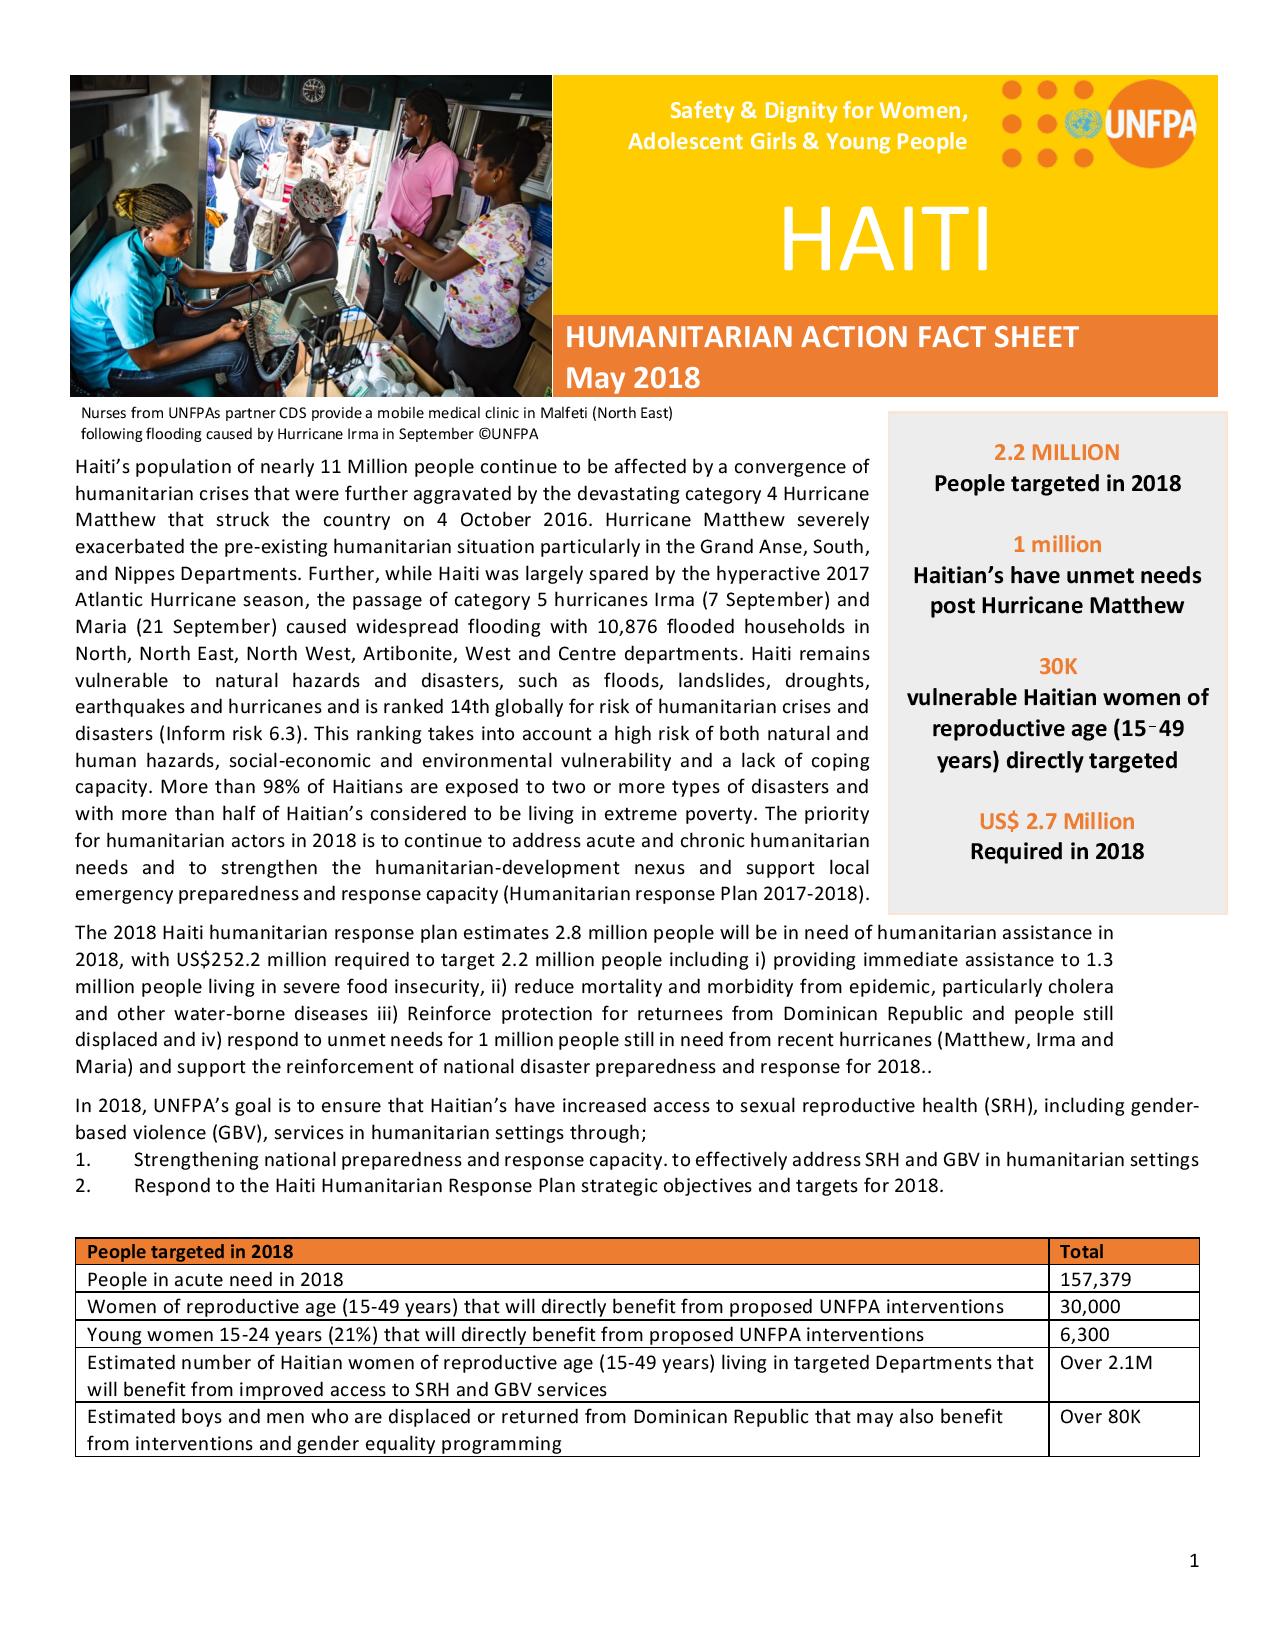 UNFPA Haiti UNFPA Haiti 2018 Haiti humanitarian response plan